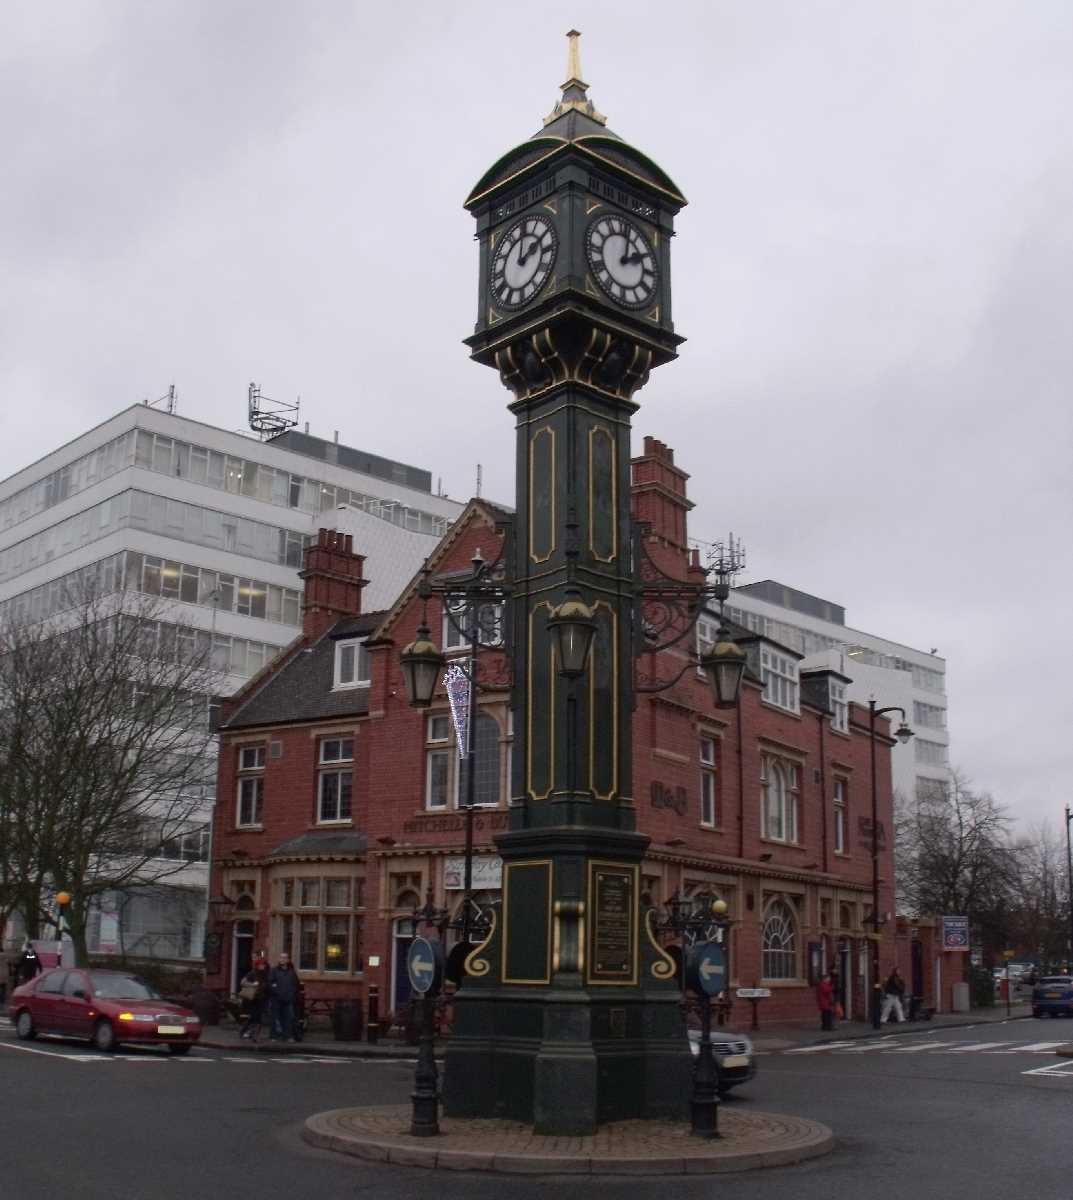 Rose Villa Tavern - Chamberlain Memorial Clock Jewellery Quarter (November 2009)